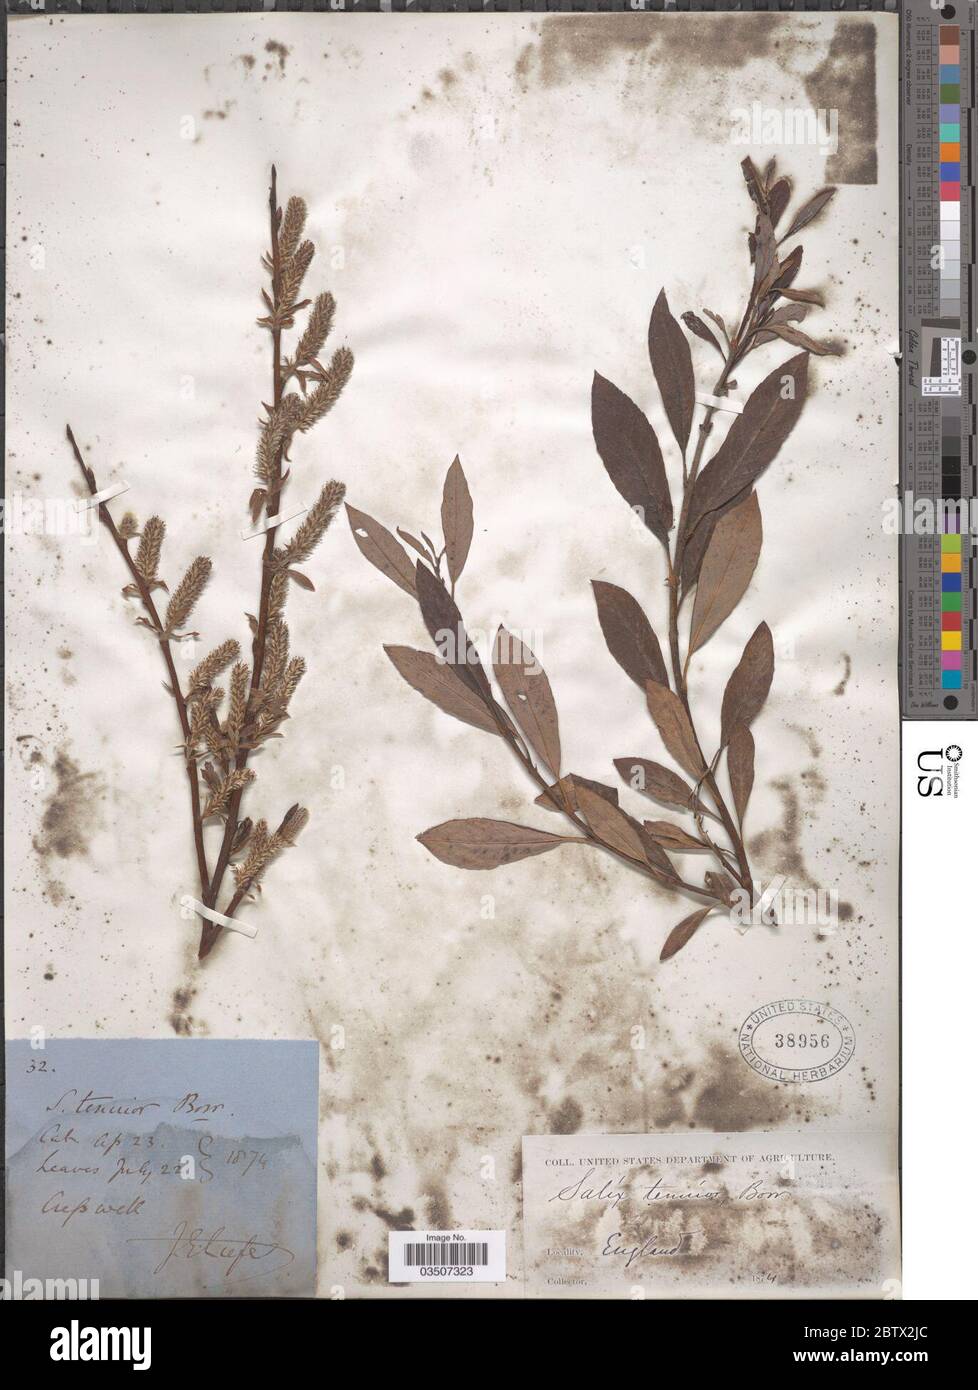 Salix tenuior Borrer. Stock Photo